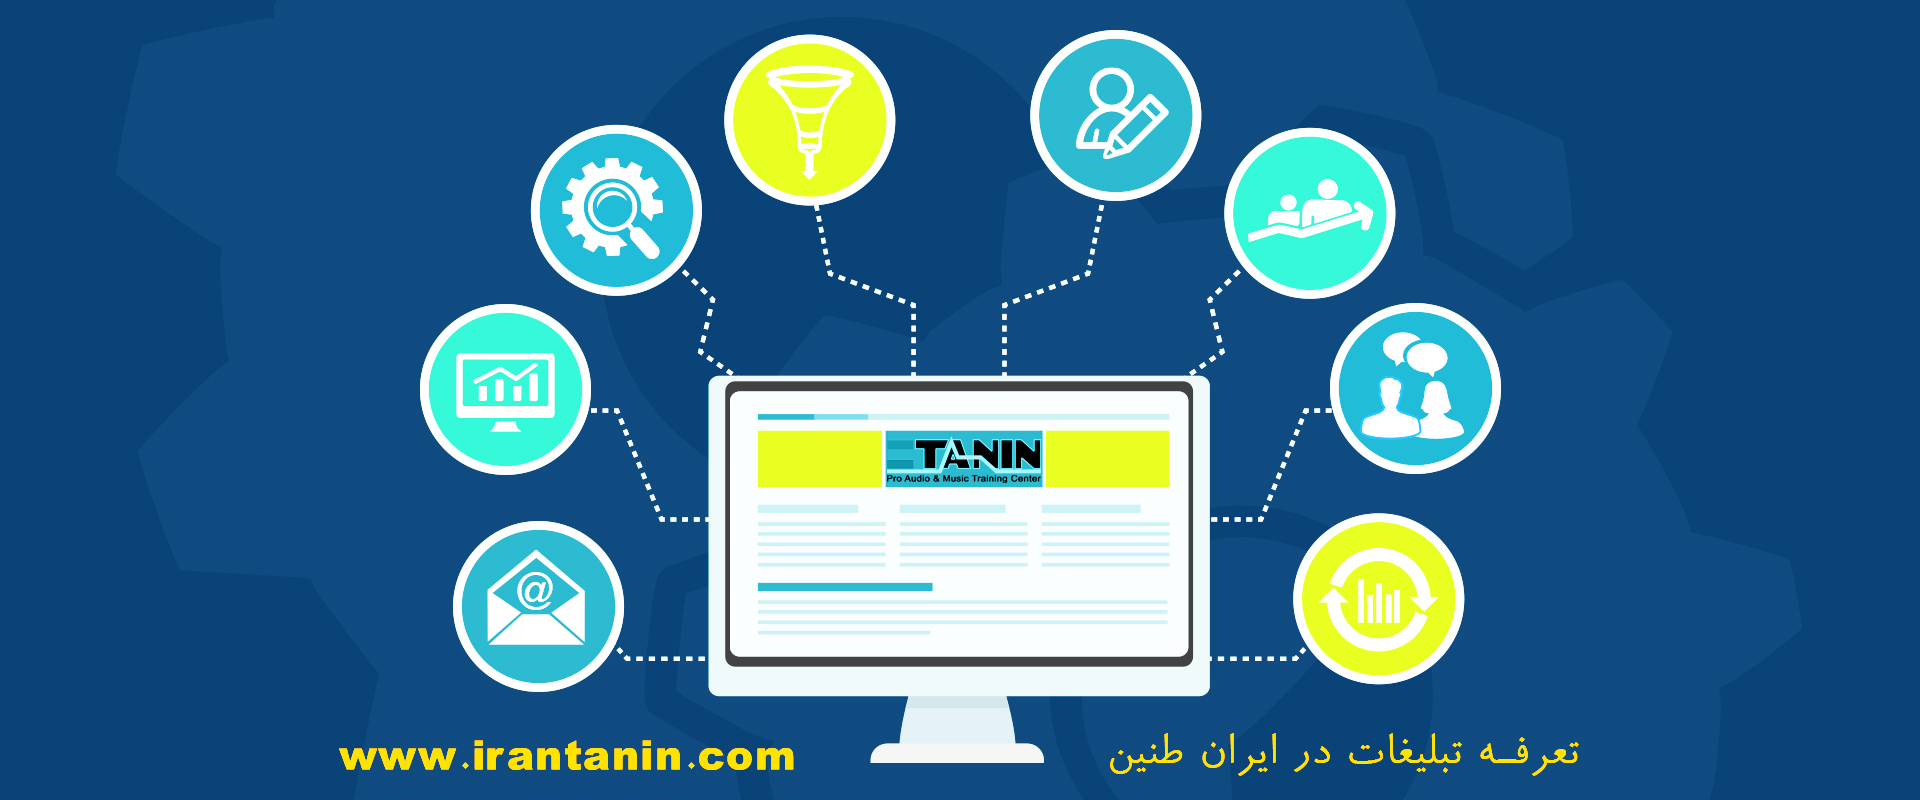 www.irantanin 2019 Advertising - تعرفه تبلیغات در ایران طنین